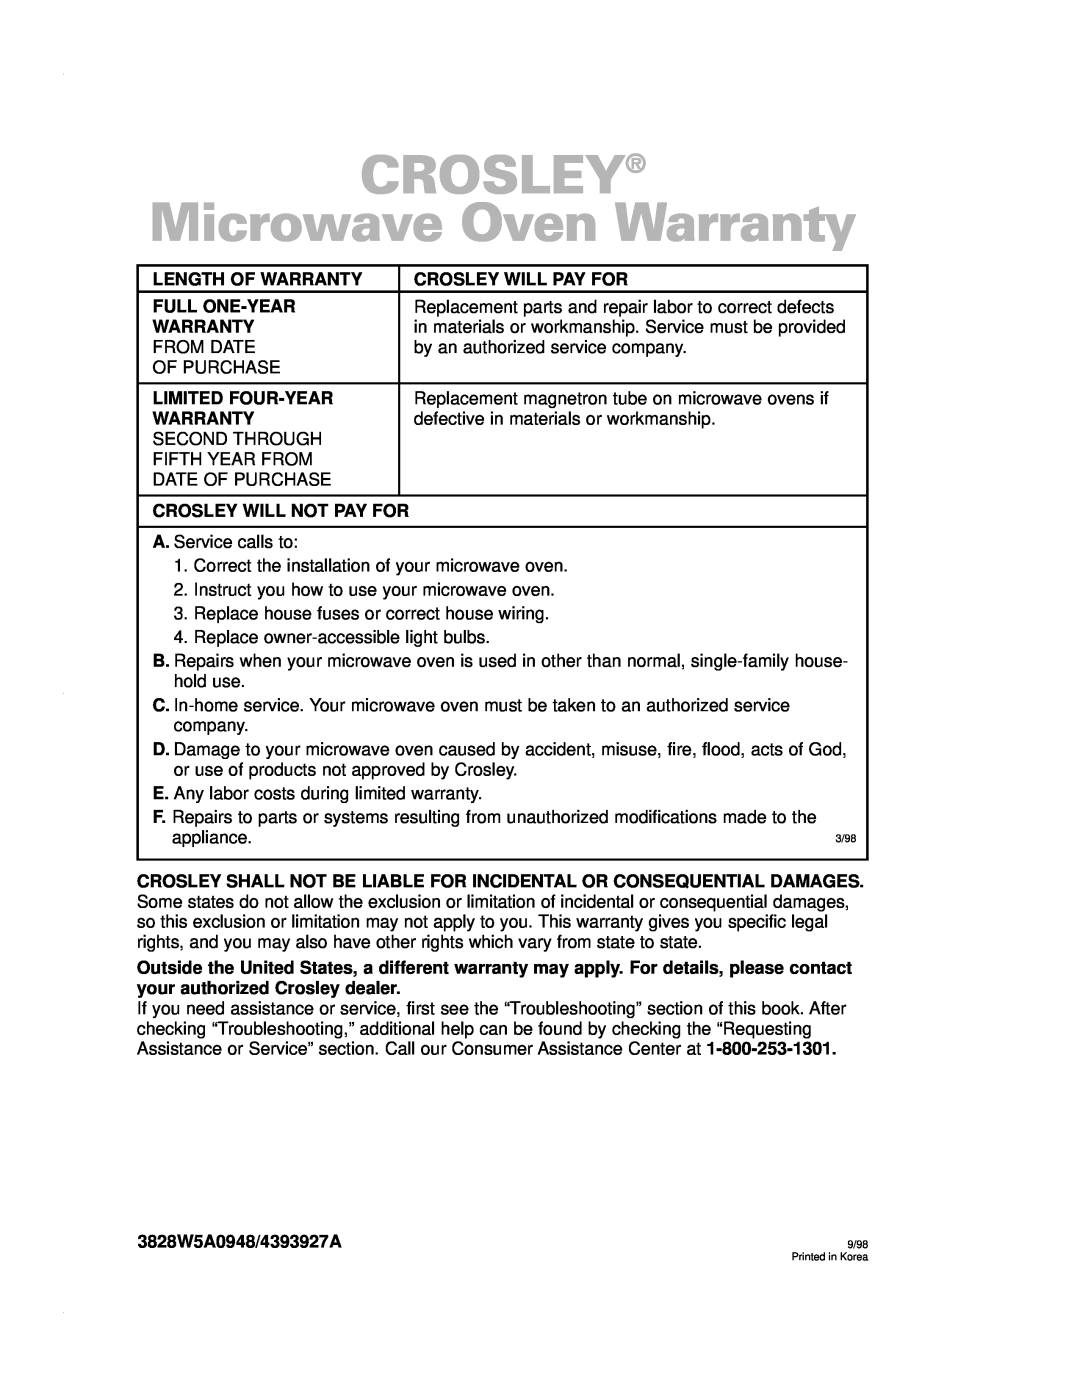 Crosley CMT135SG installation instructions CROSLEY Microwave Oven Warranty 